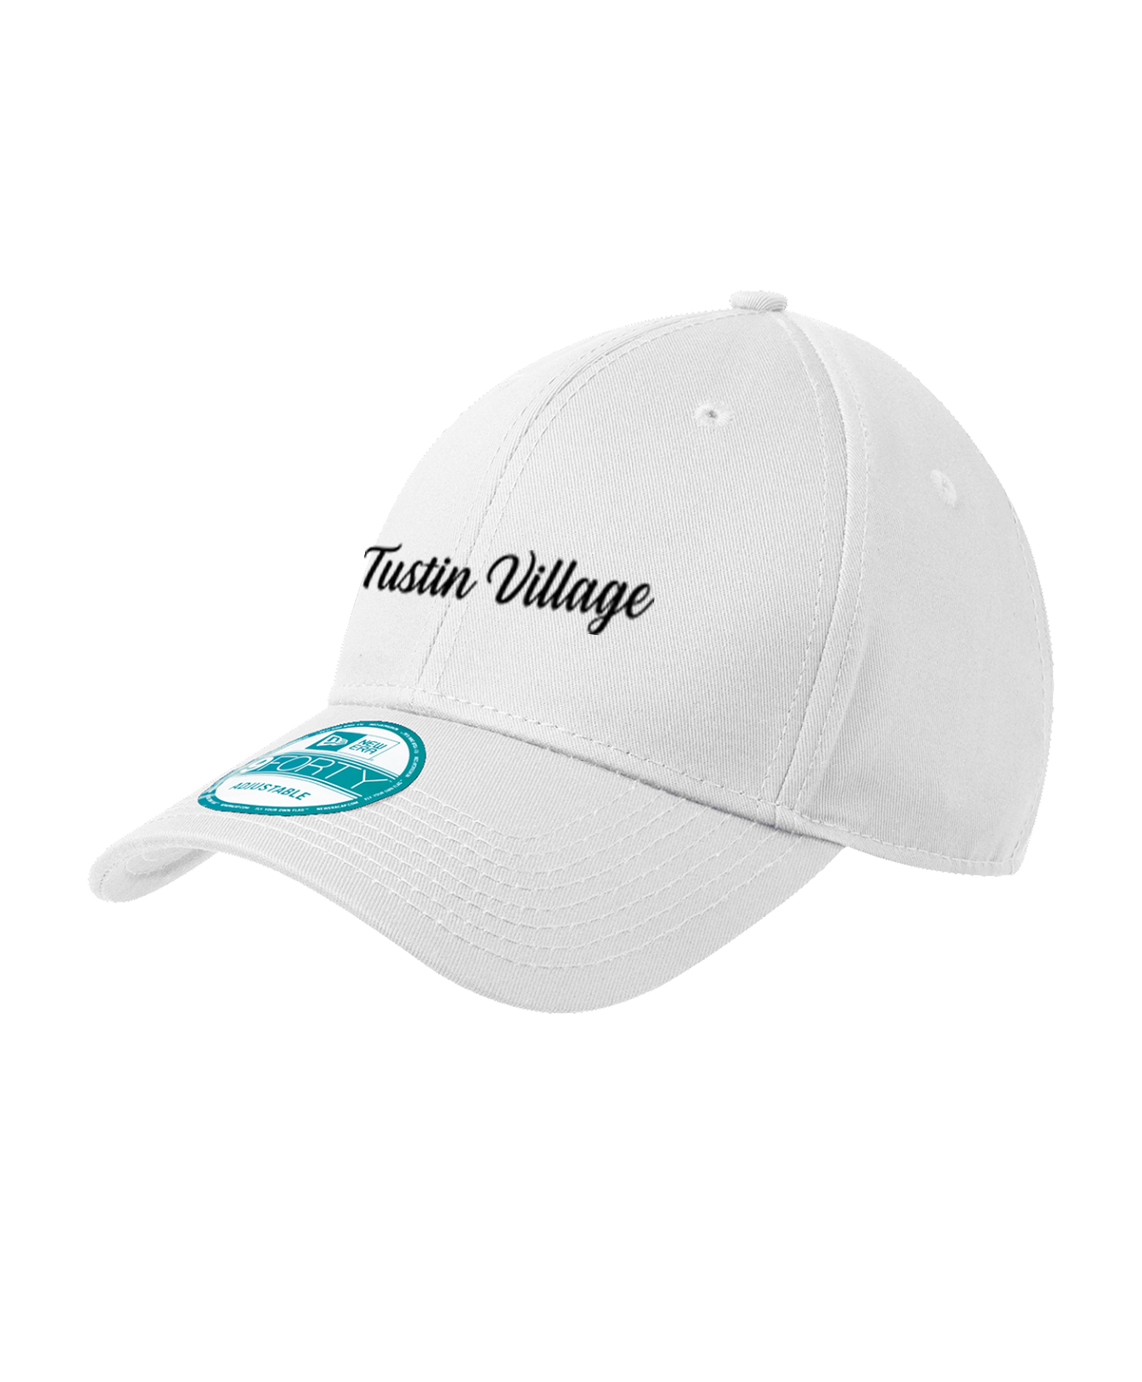 Tustin Village - New Era® - Adjustable Structured Cap